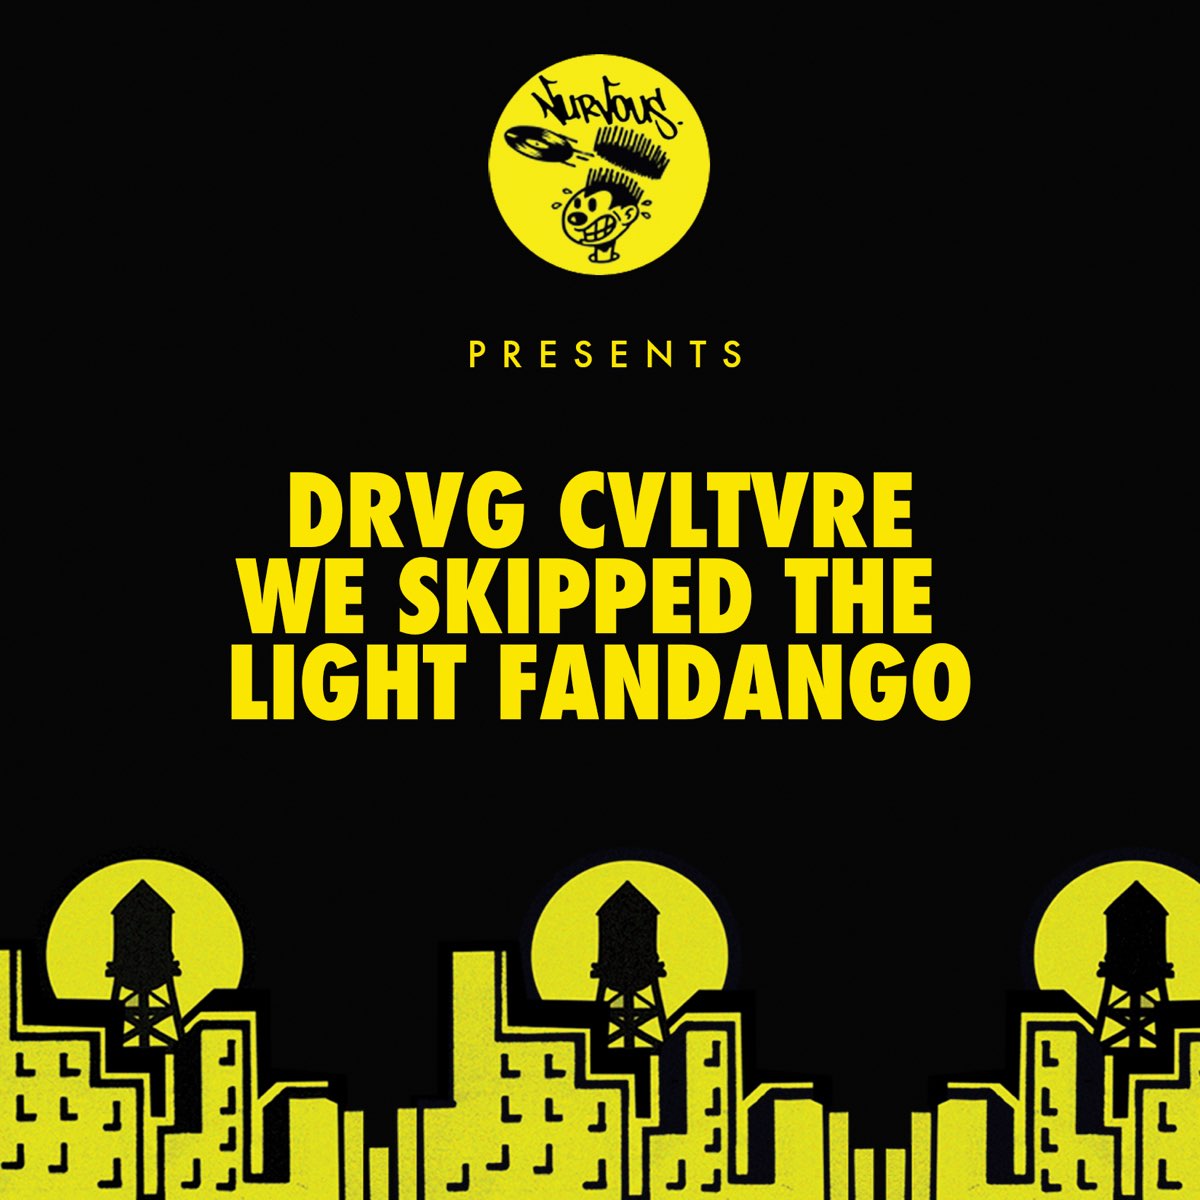 We Skipped the Light Fandango - EP by Drvg Cvltvre on Apple